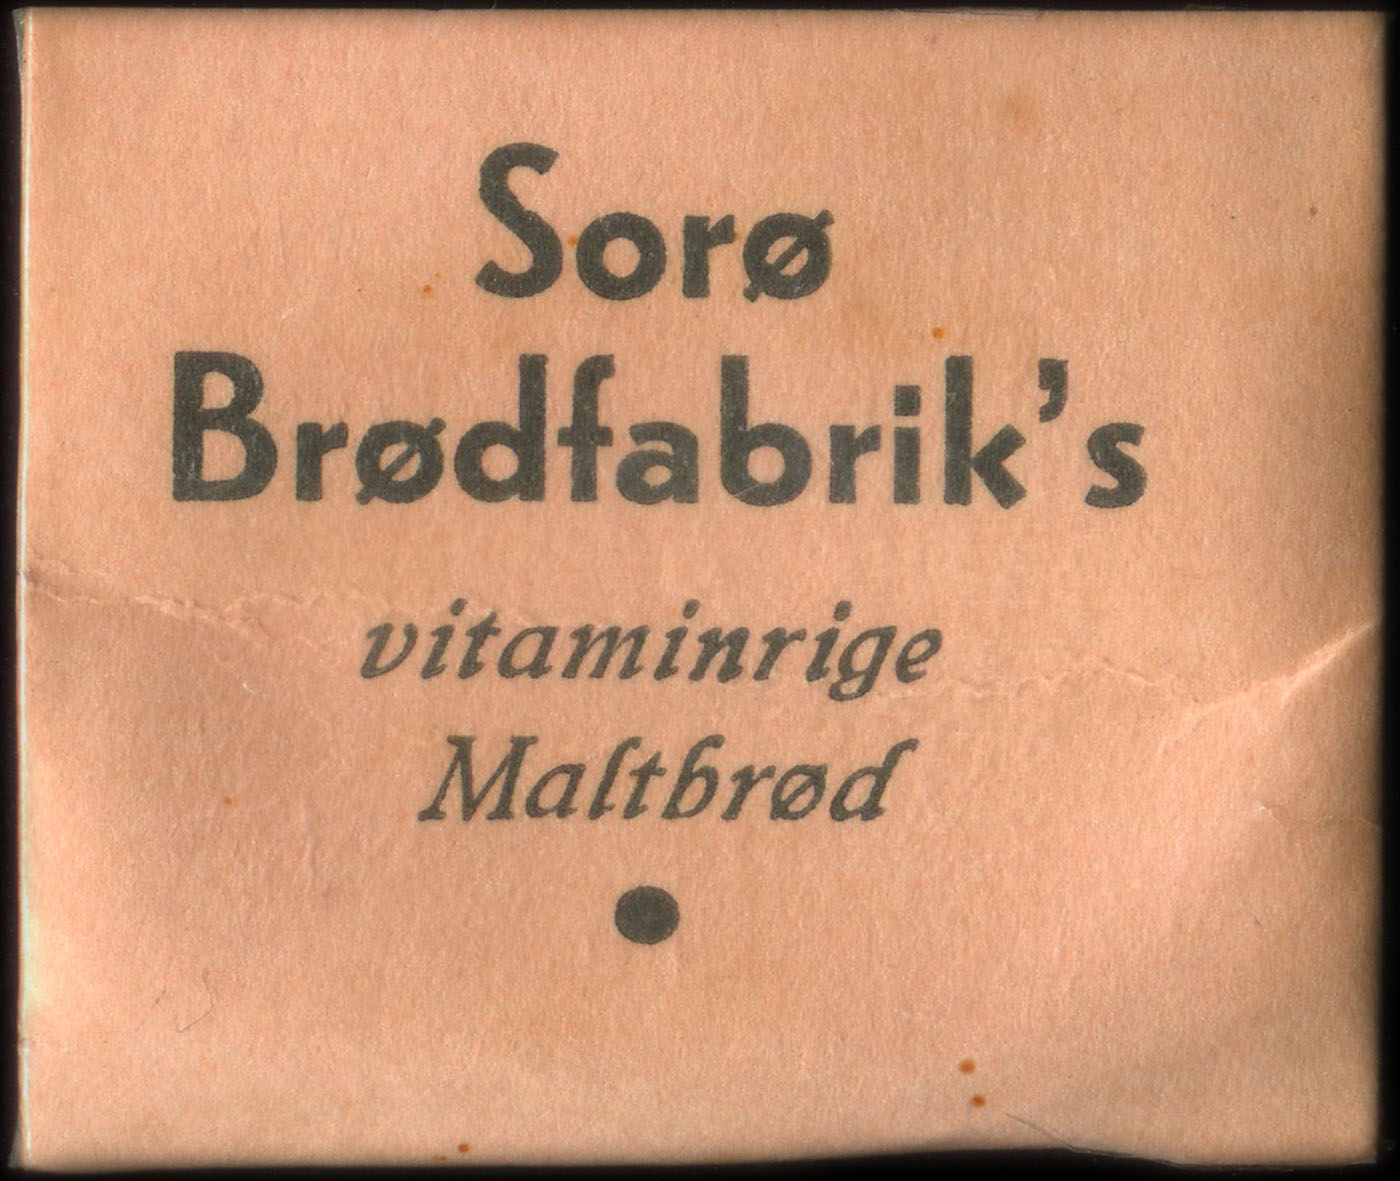 Timbre-monnaie Sorø Brødfabrik’s vitaminrige Maltbrød - Danemark